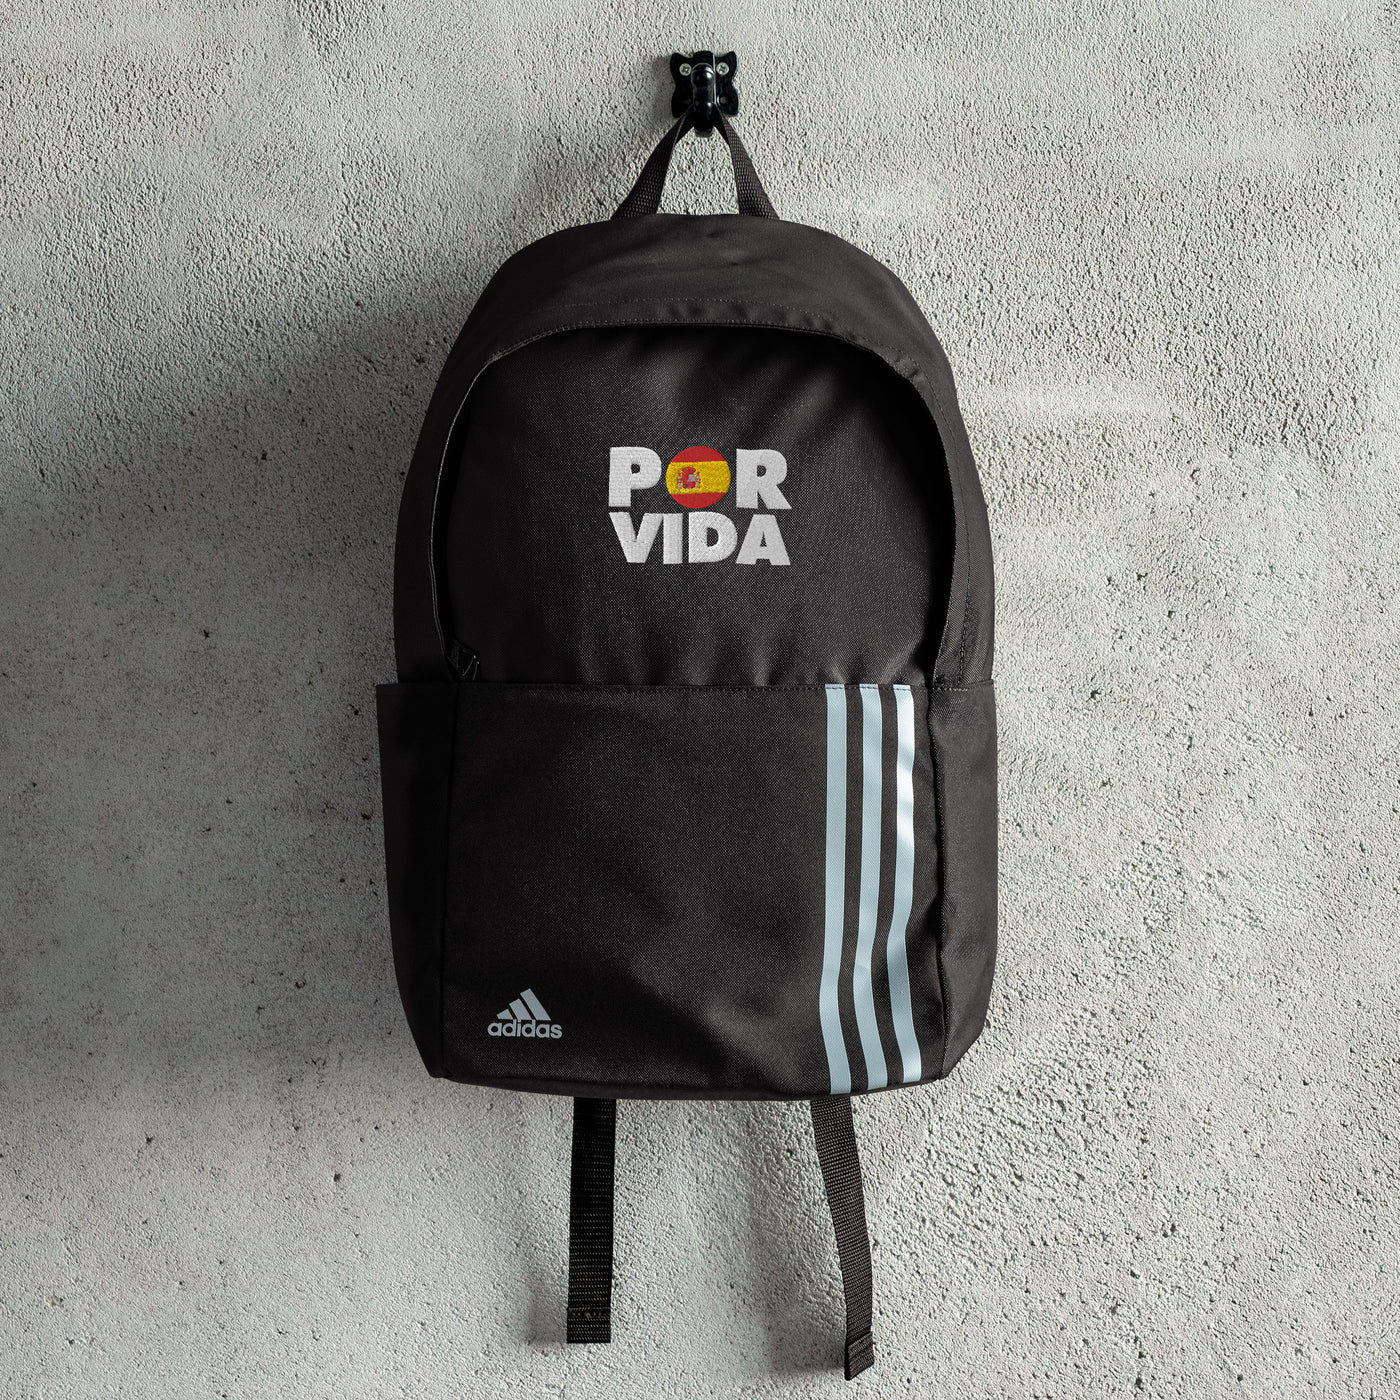 POR VIDA Spain adidas backpack